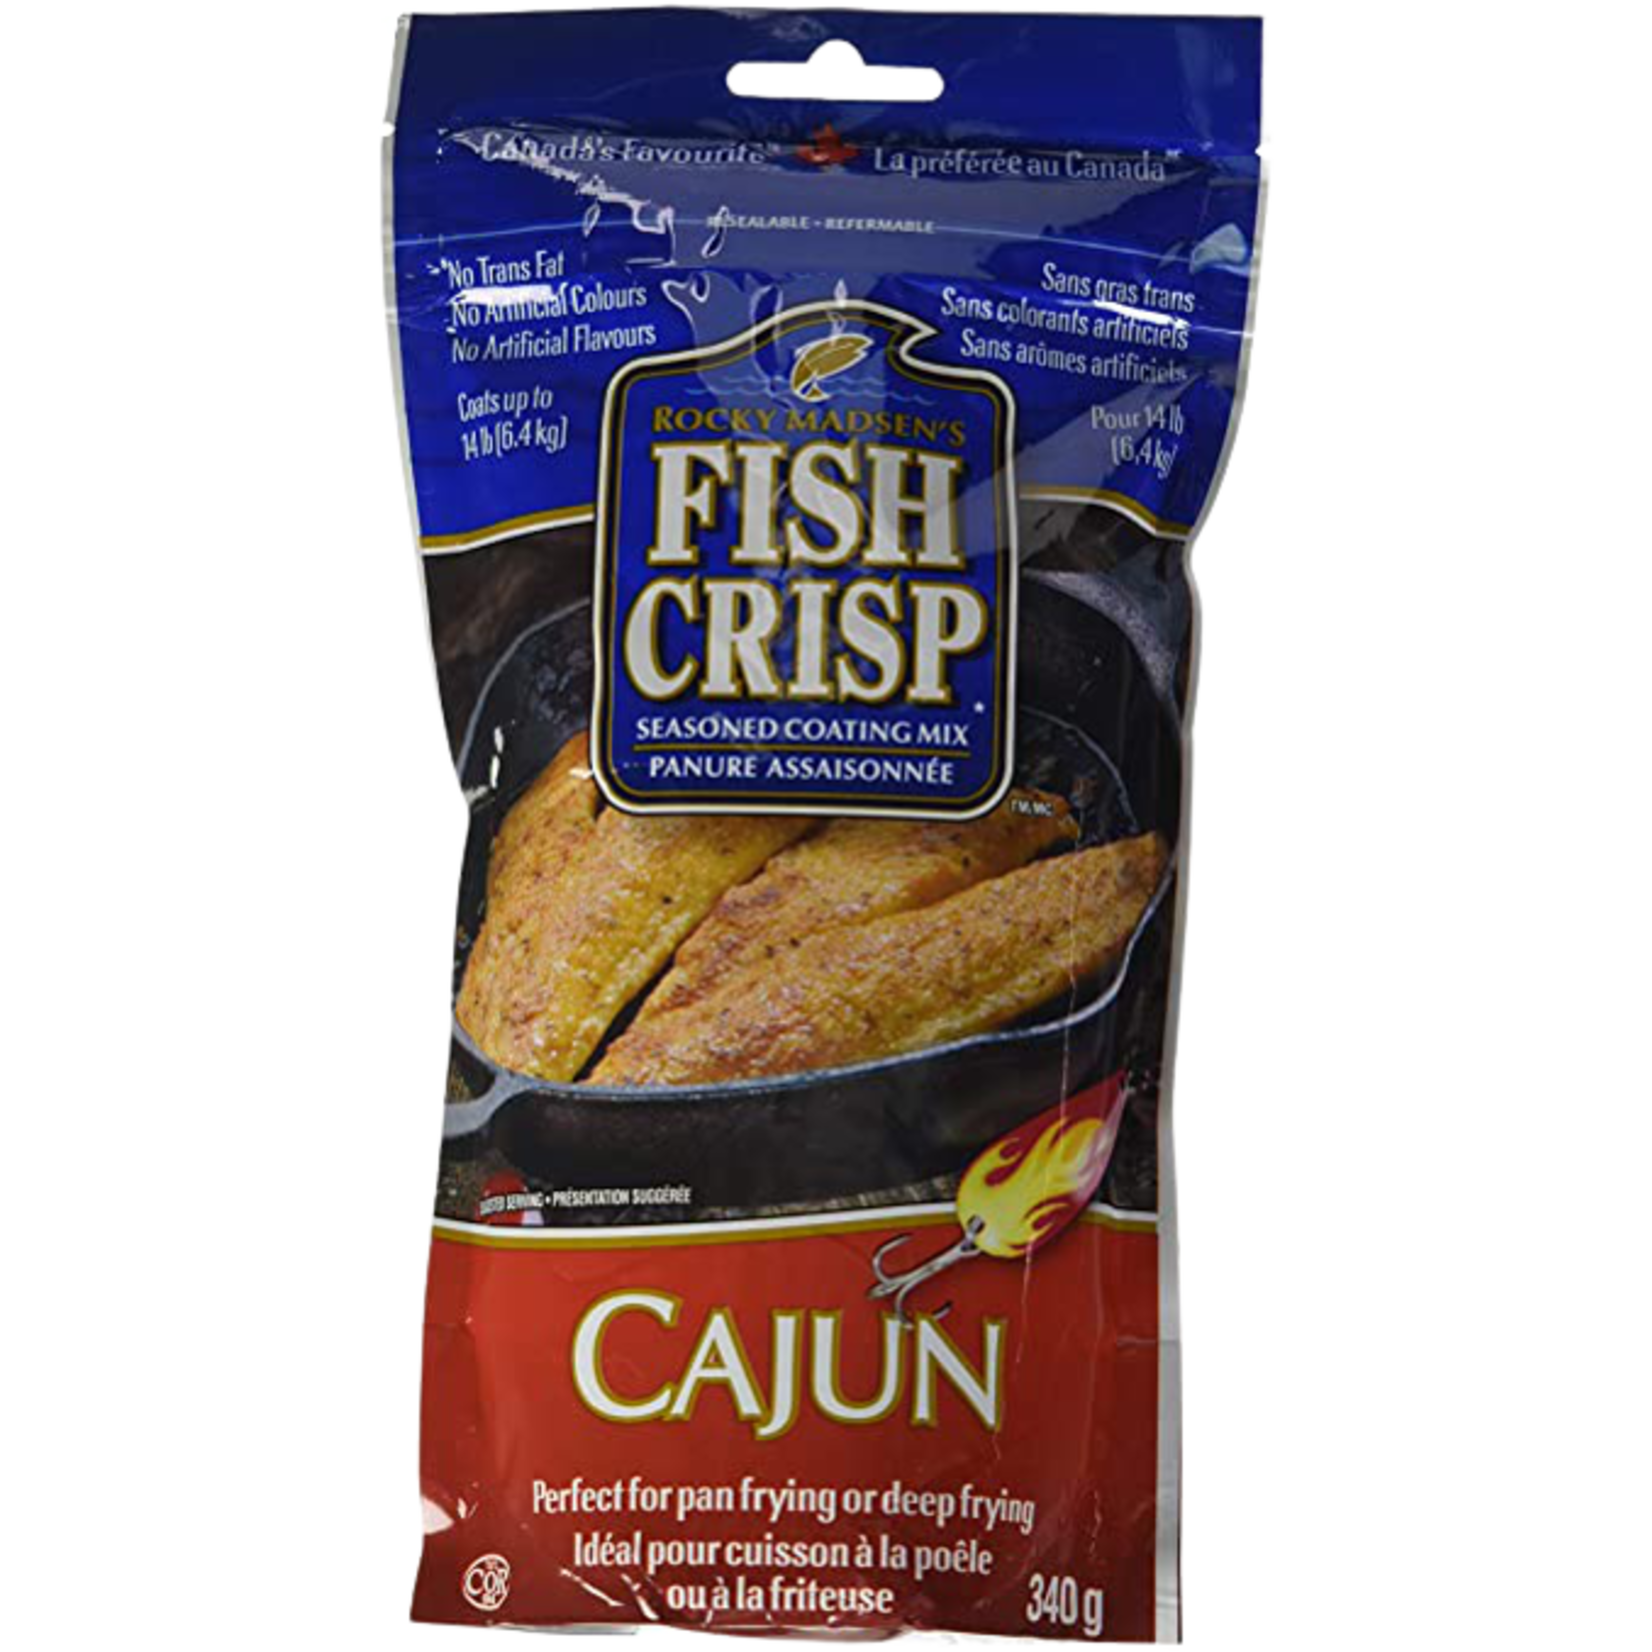 FISH CRISP - CAJUN